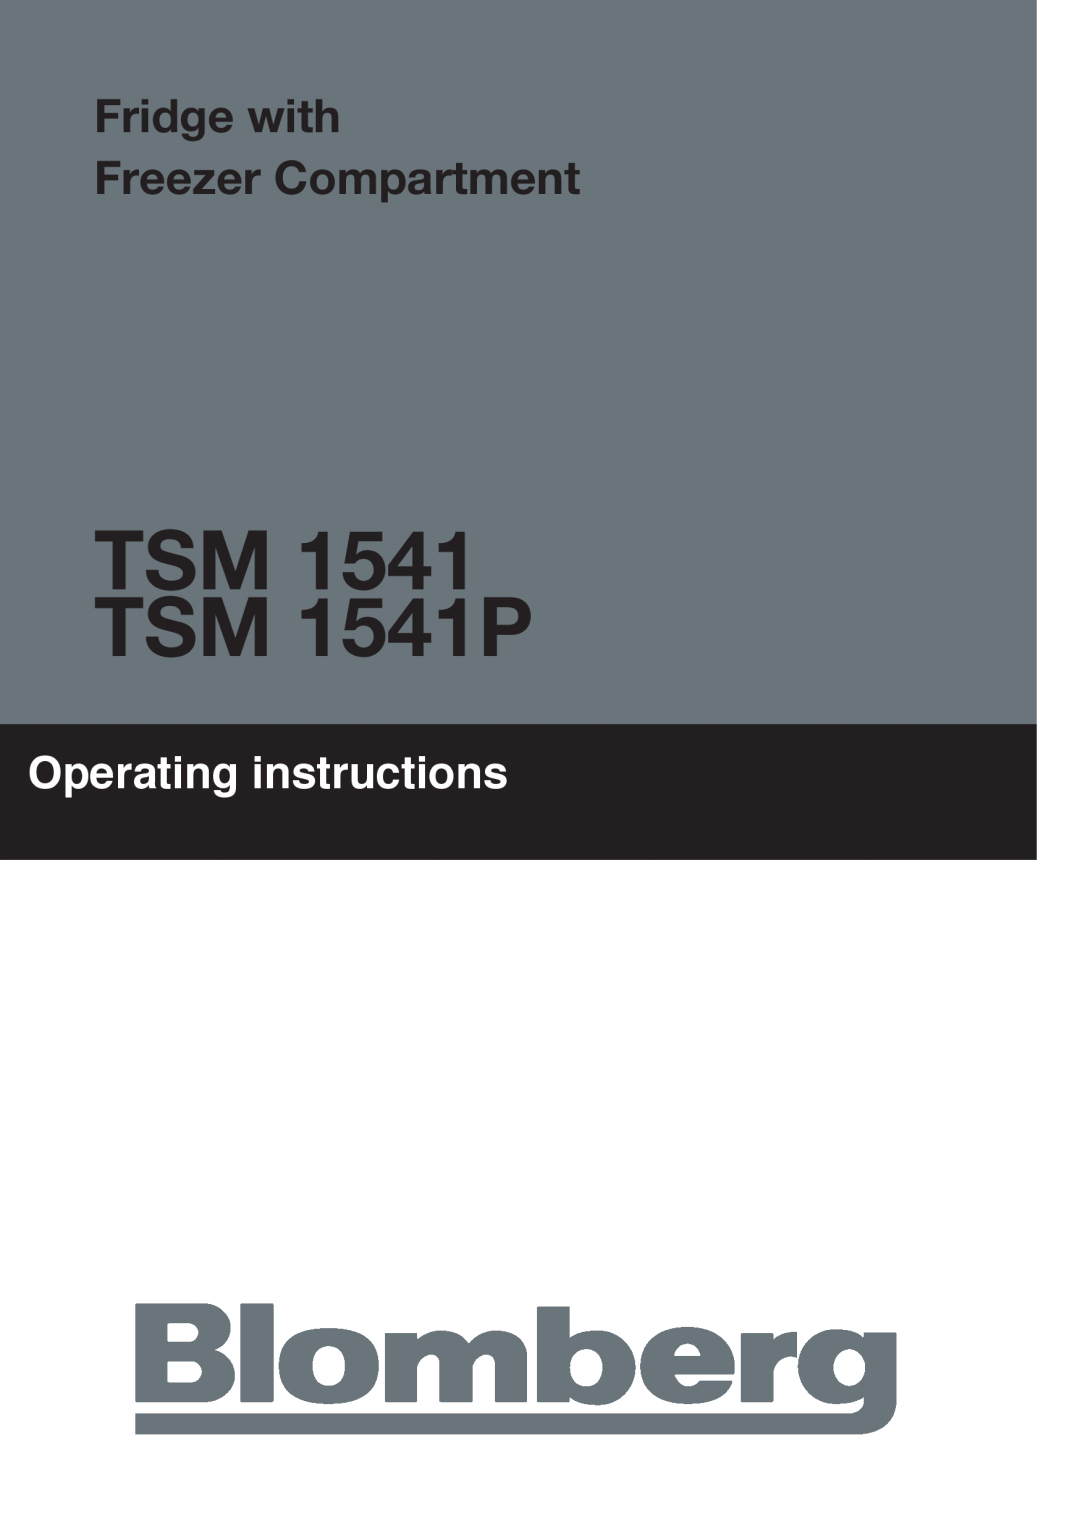 Blomberg manual TSM 1541 TSM 1541P, Fridge with Freezer Compartment, Operating instructions 